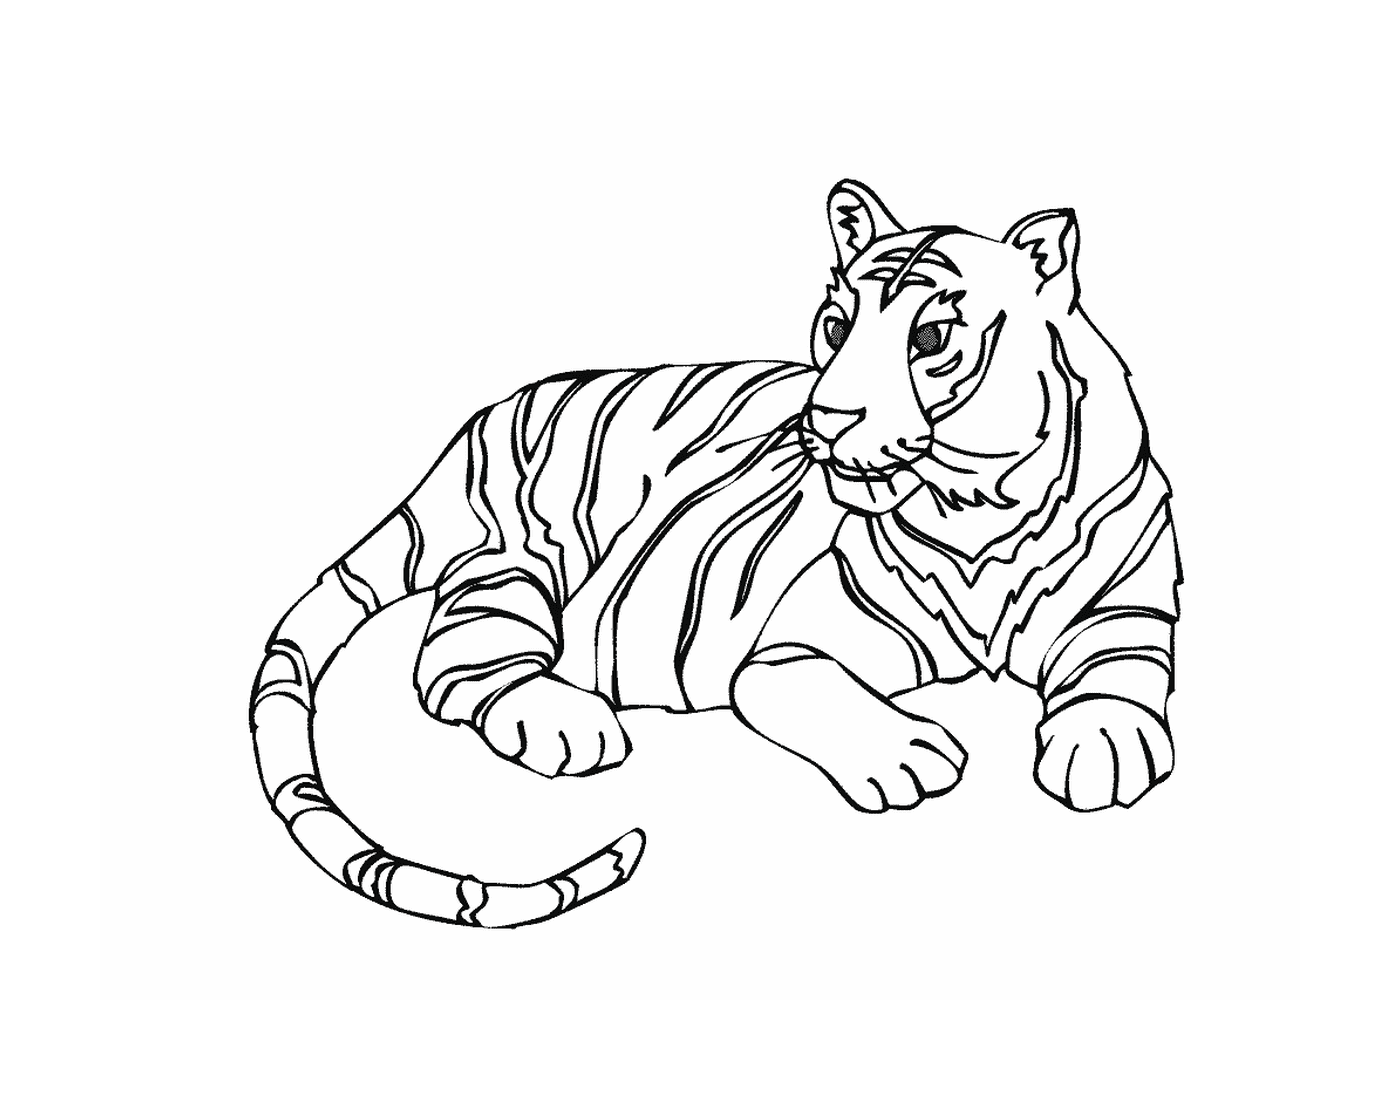  A tiger in the savannah 